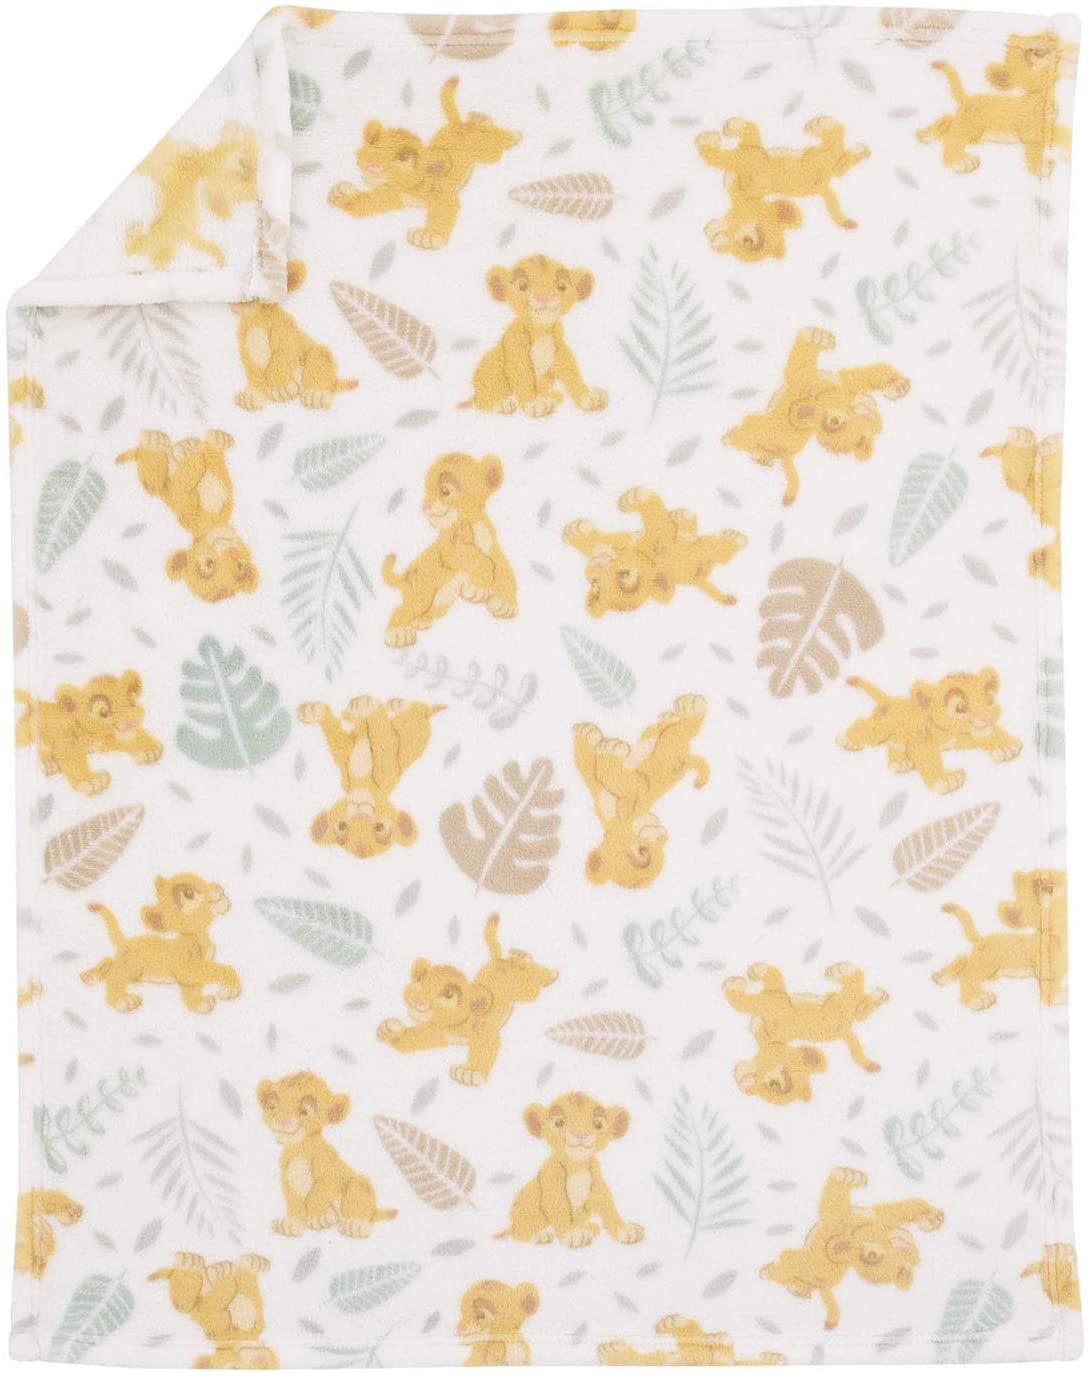 Disney Lion King French Fiber Baby Blanket - image 1 of 2